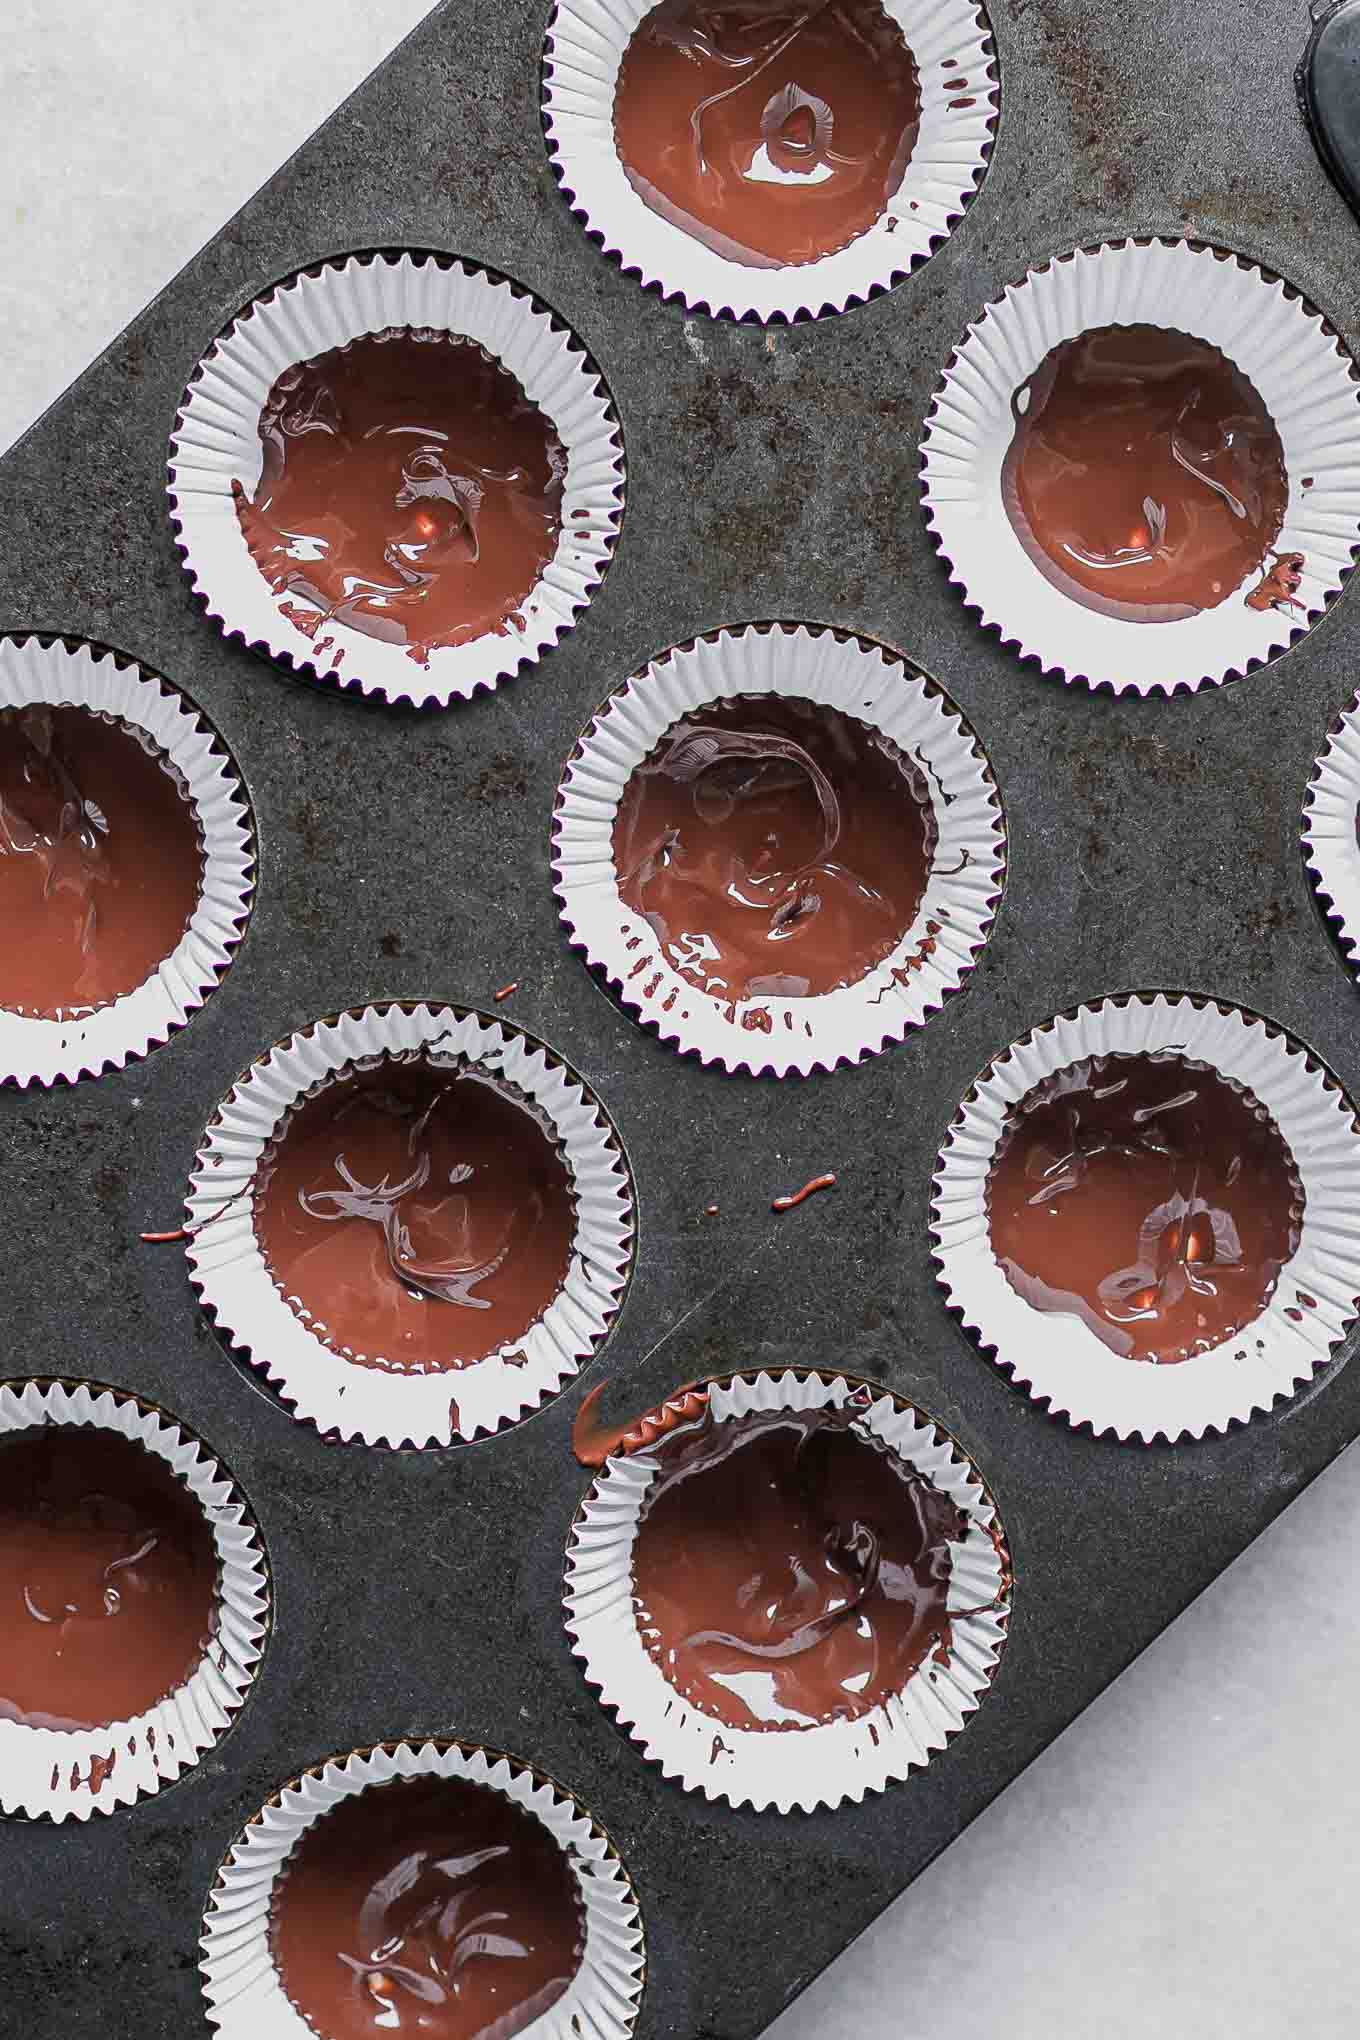 dark chocolate inside muffin liners in a muffin tin